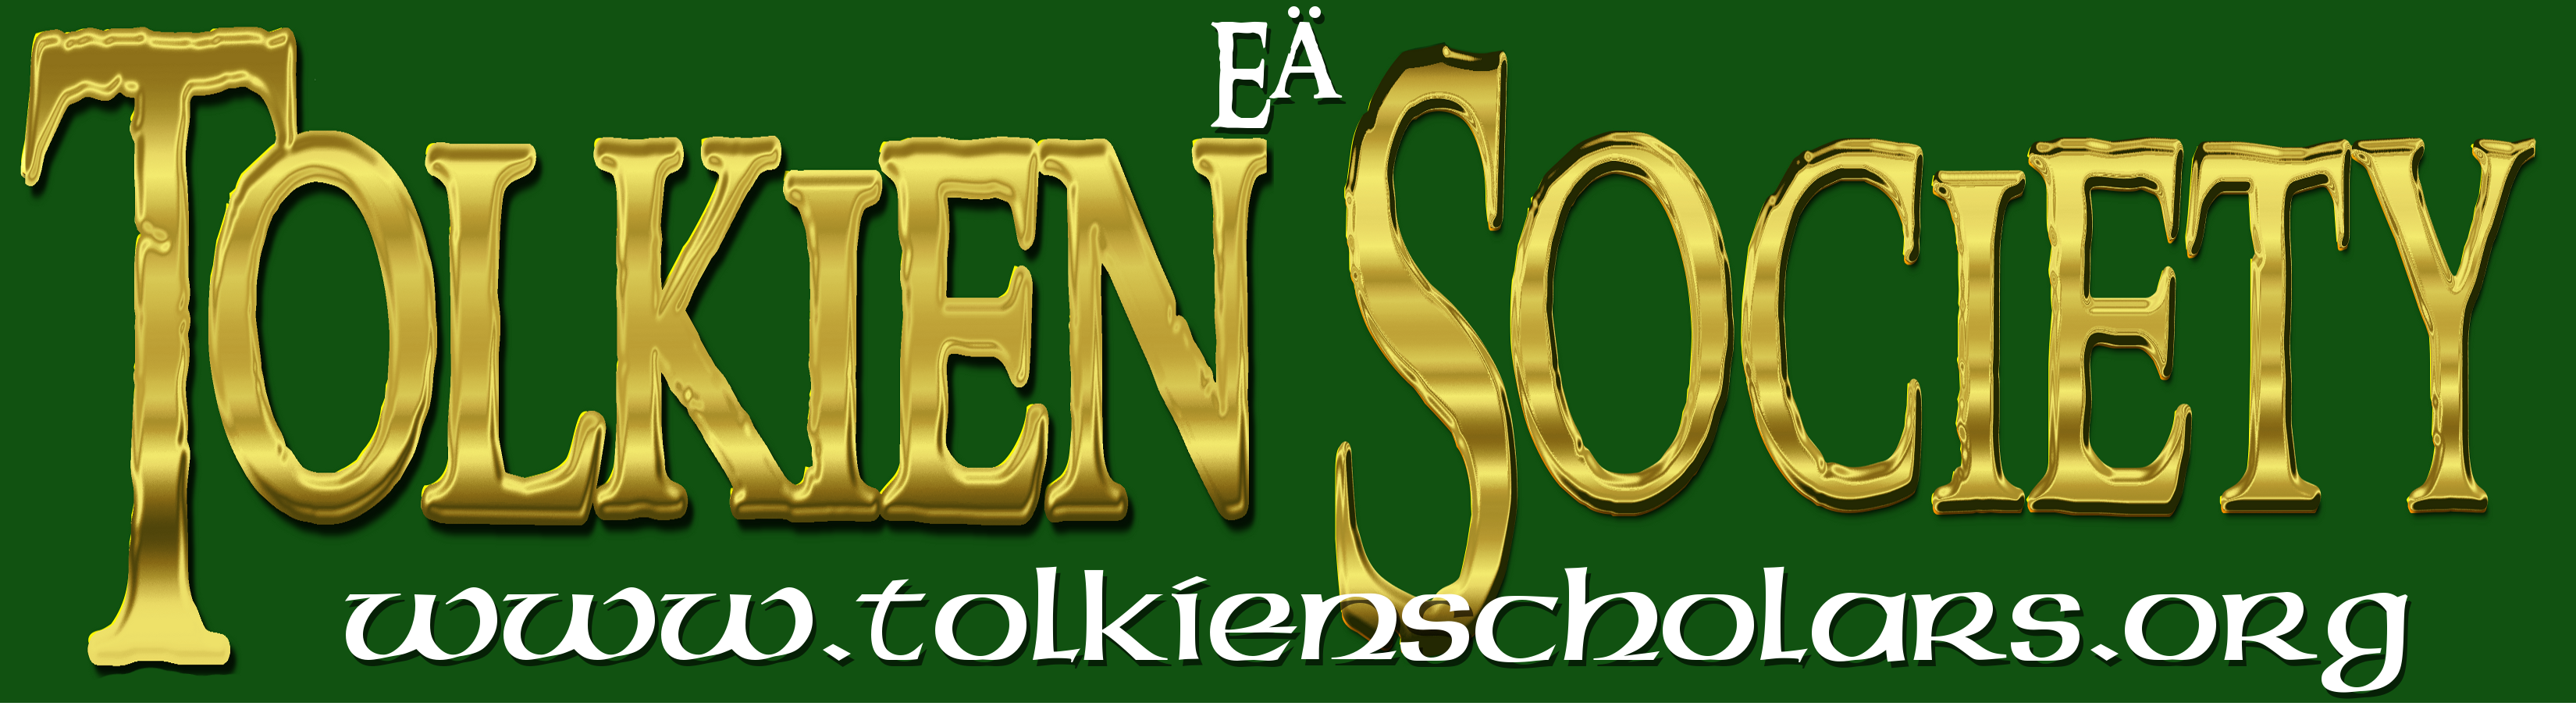 Eä Tolkien Society Meeting Notes for Octoer 15th, 2022